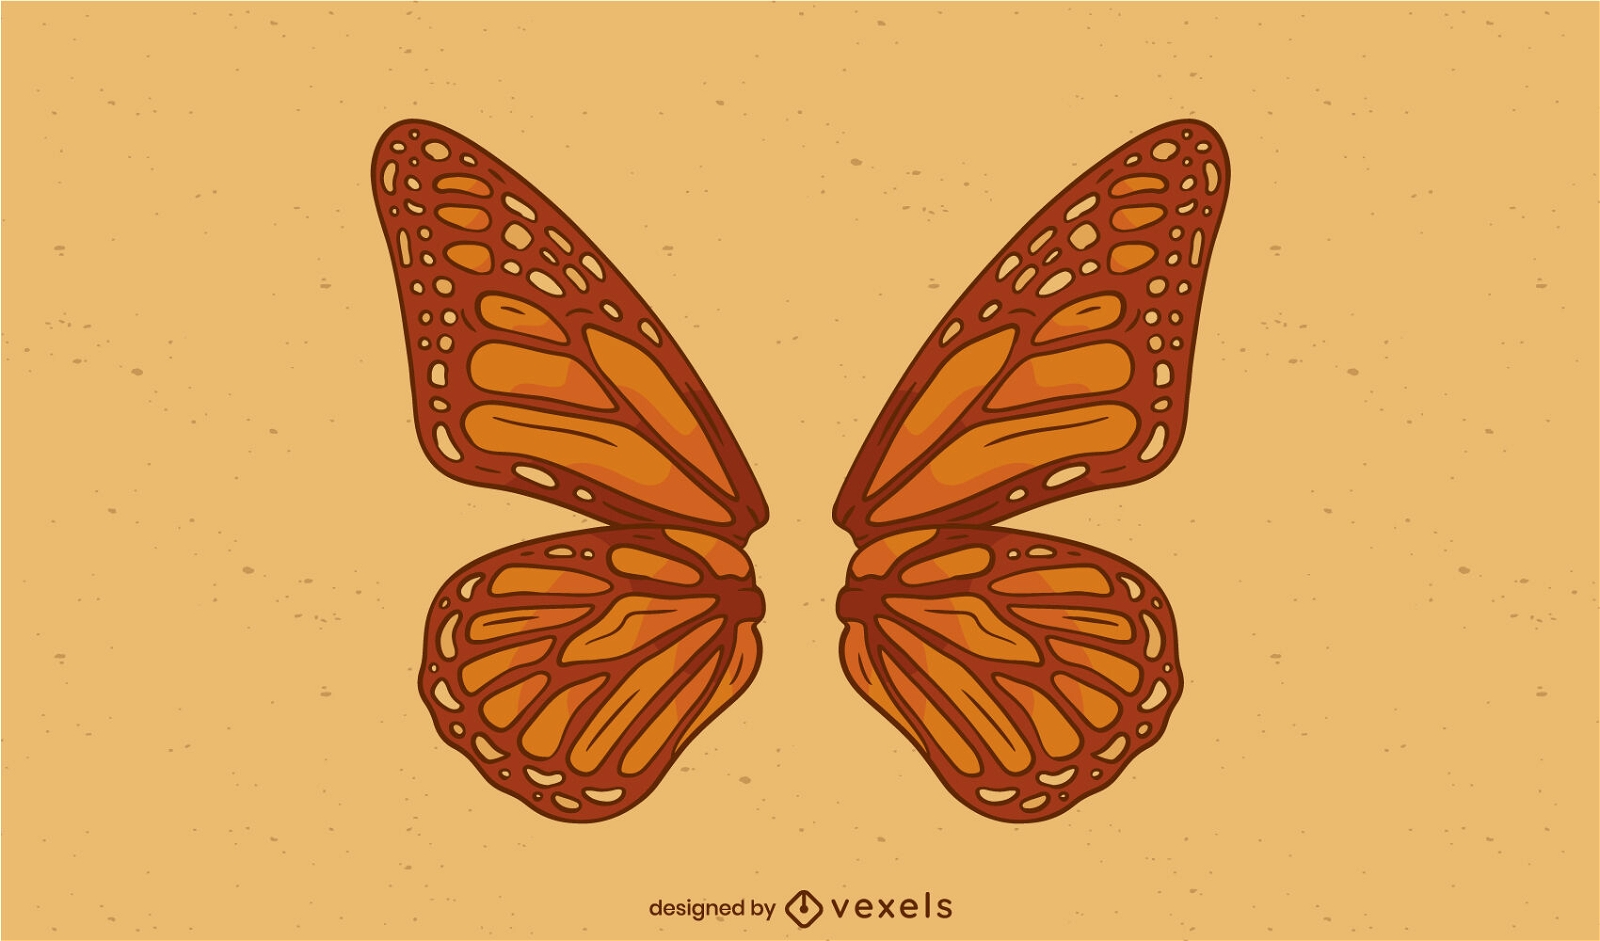 Butterfly wings illustration